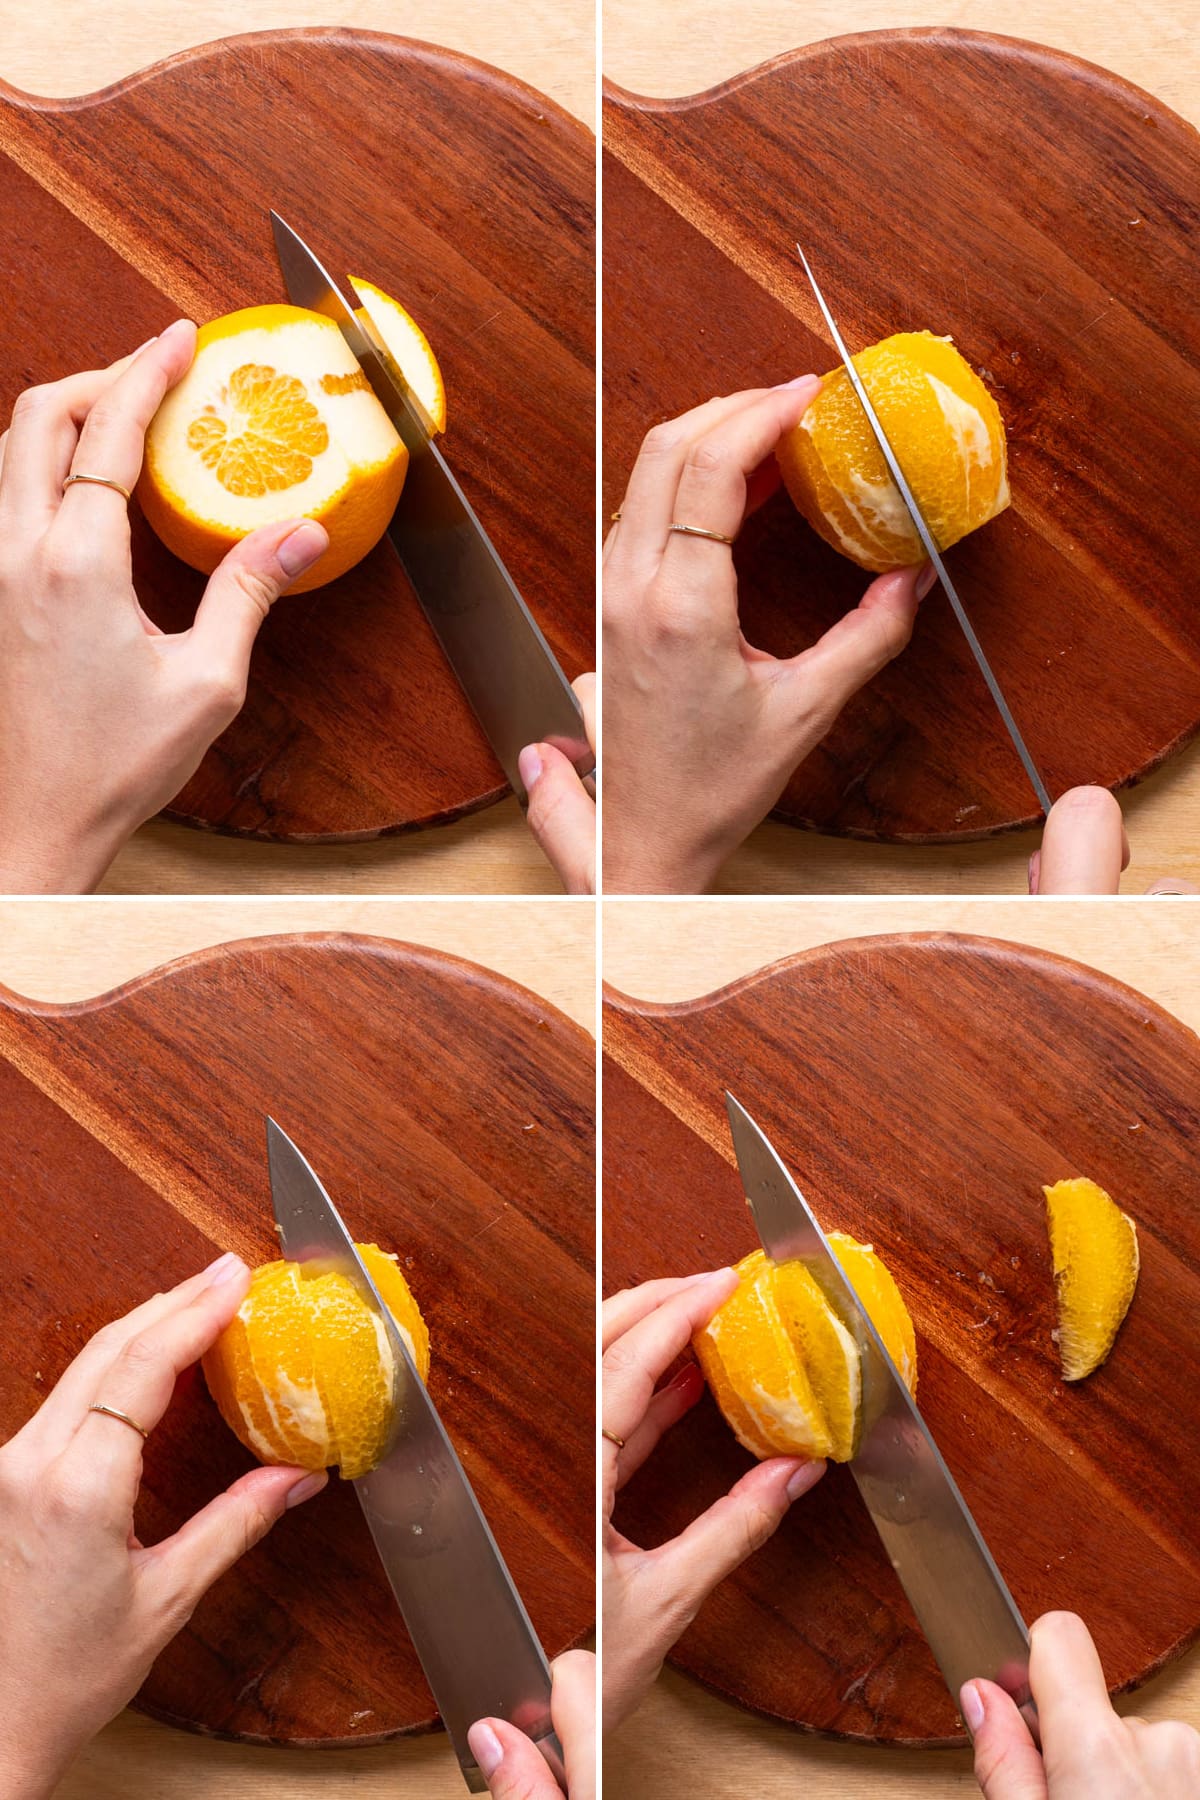 Demonstrating how to segment an orange.